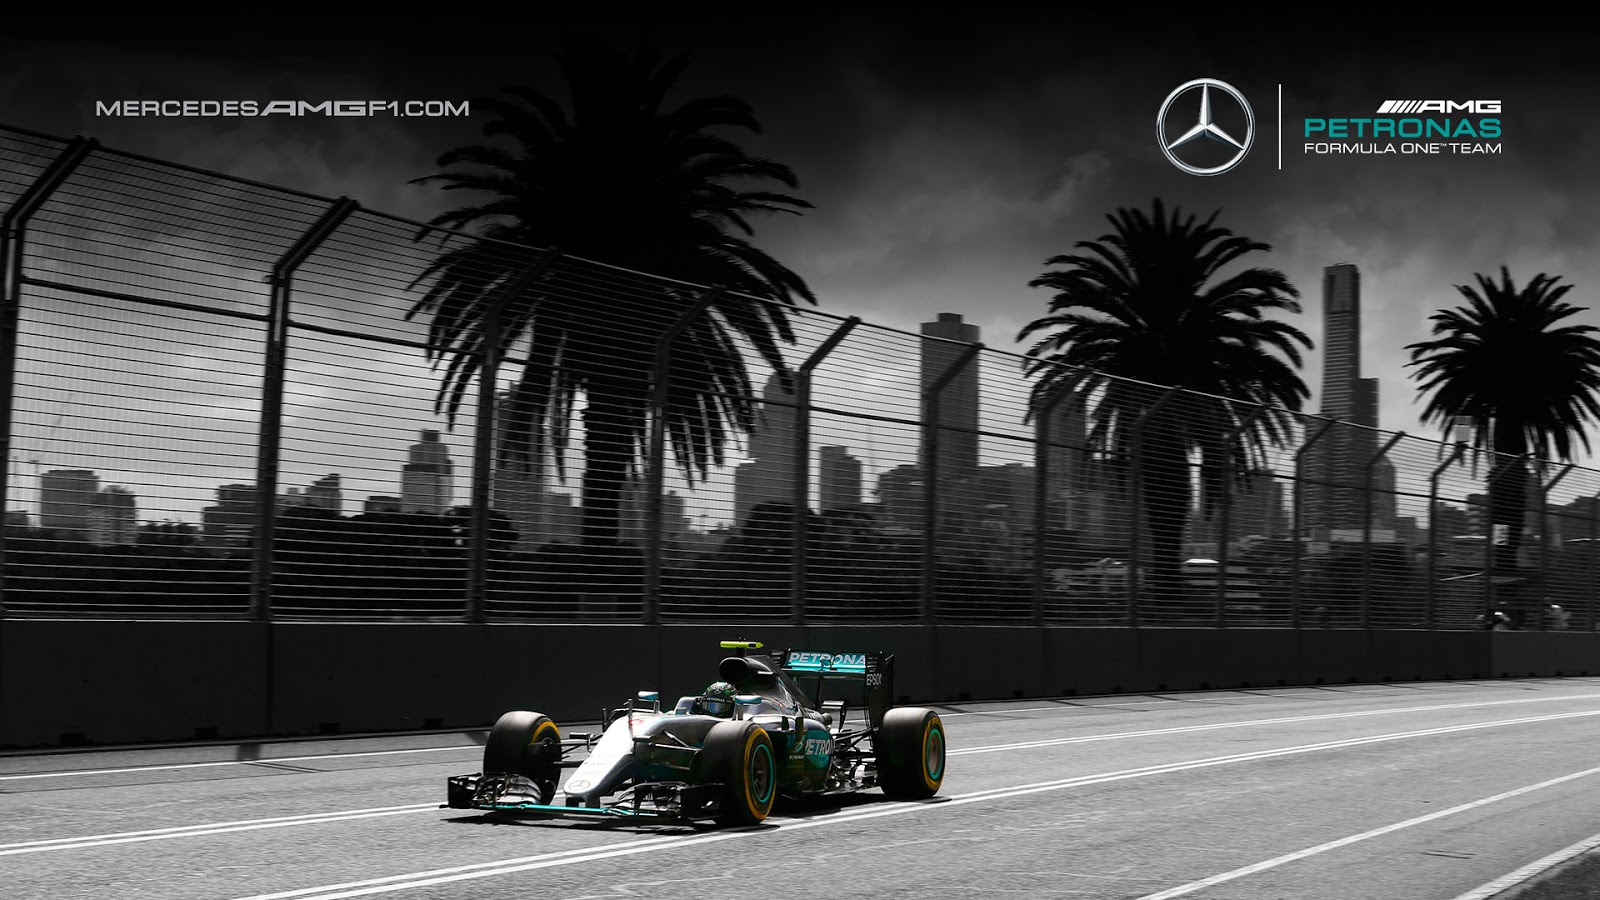 Mercedes Amg Petronas W07 F1 Wallpaper Kfzoom